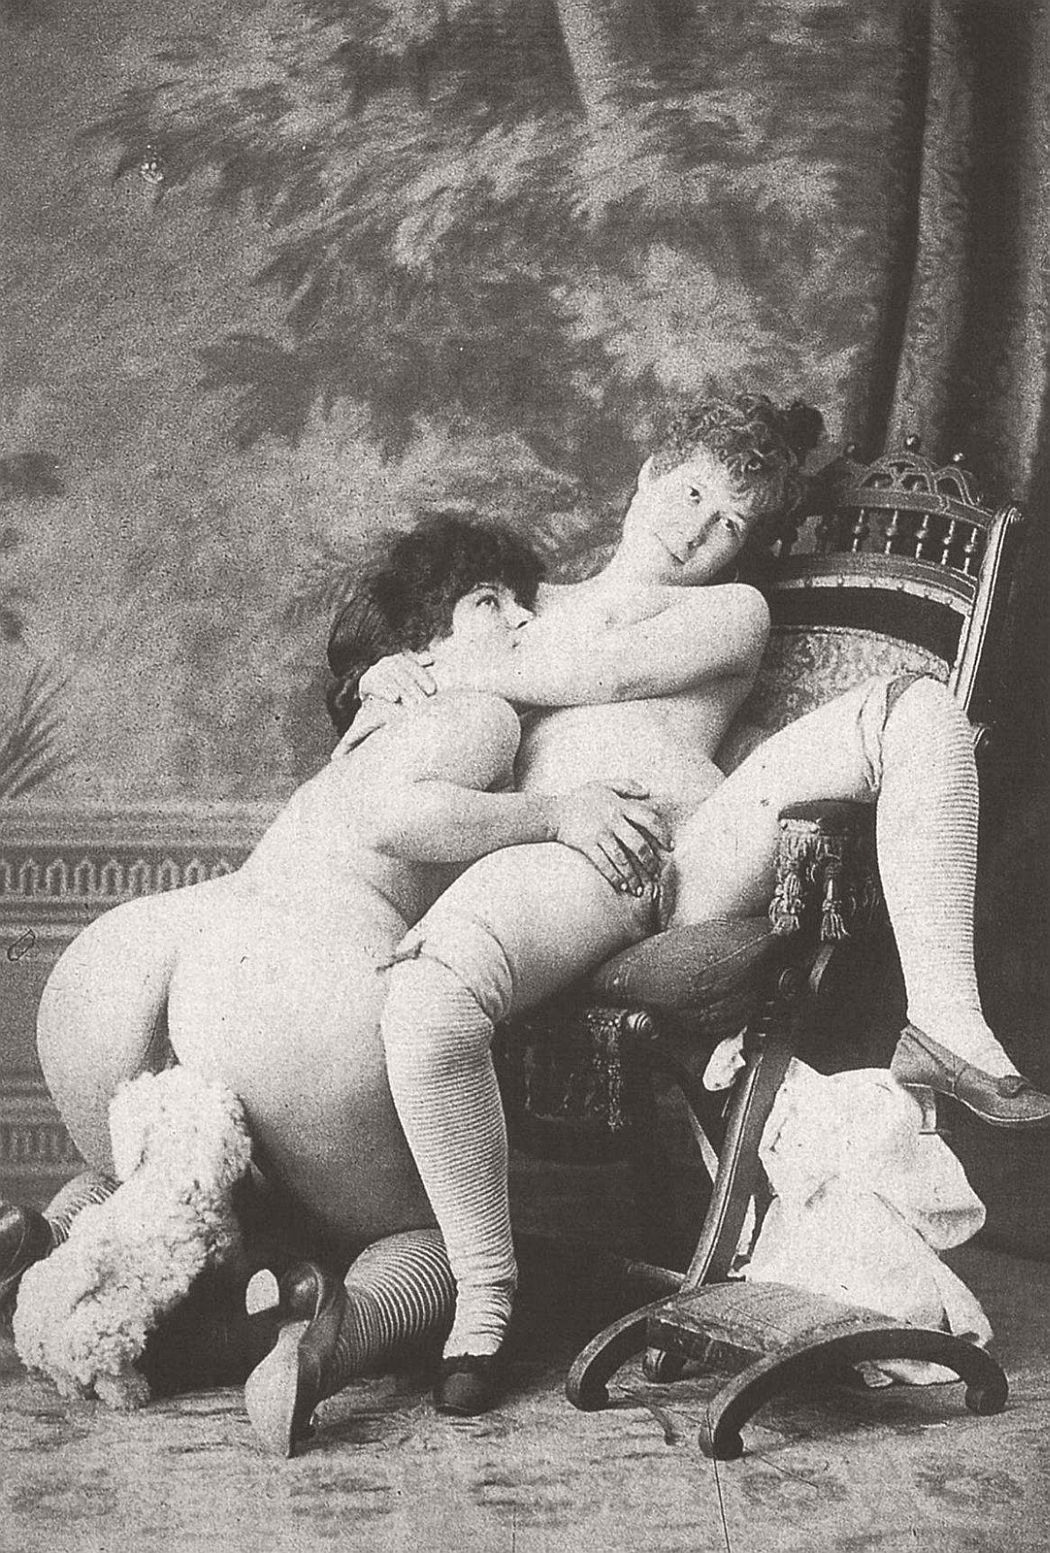 Vintage: 19th Century Lesbian Nudes (1880s) .